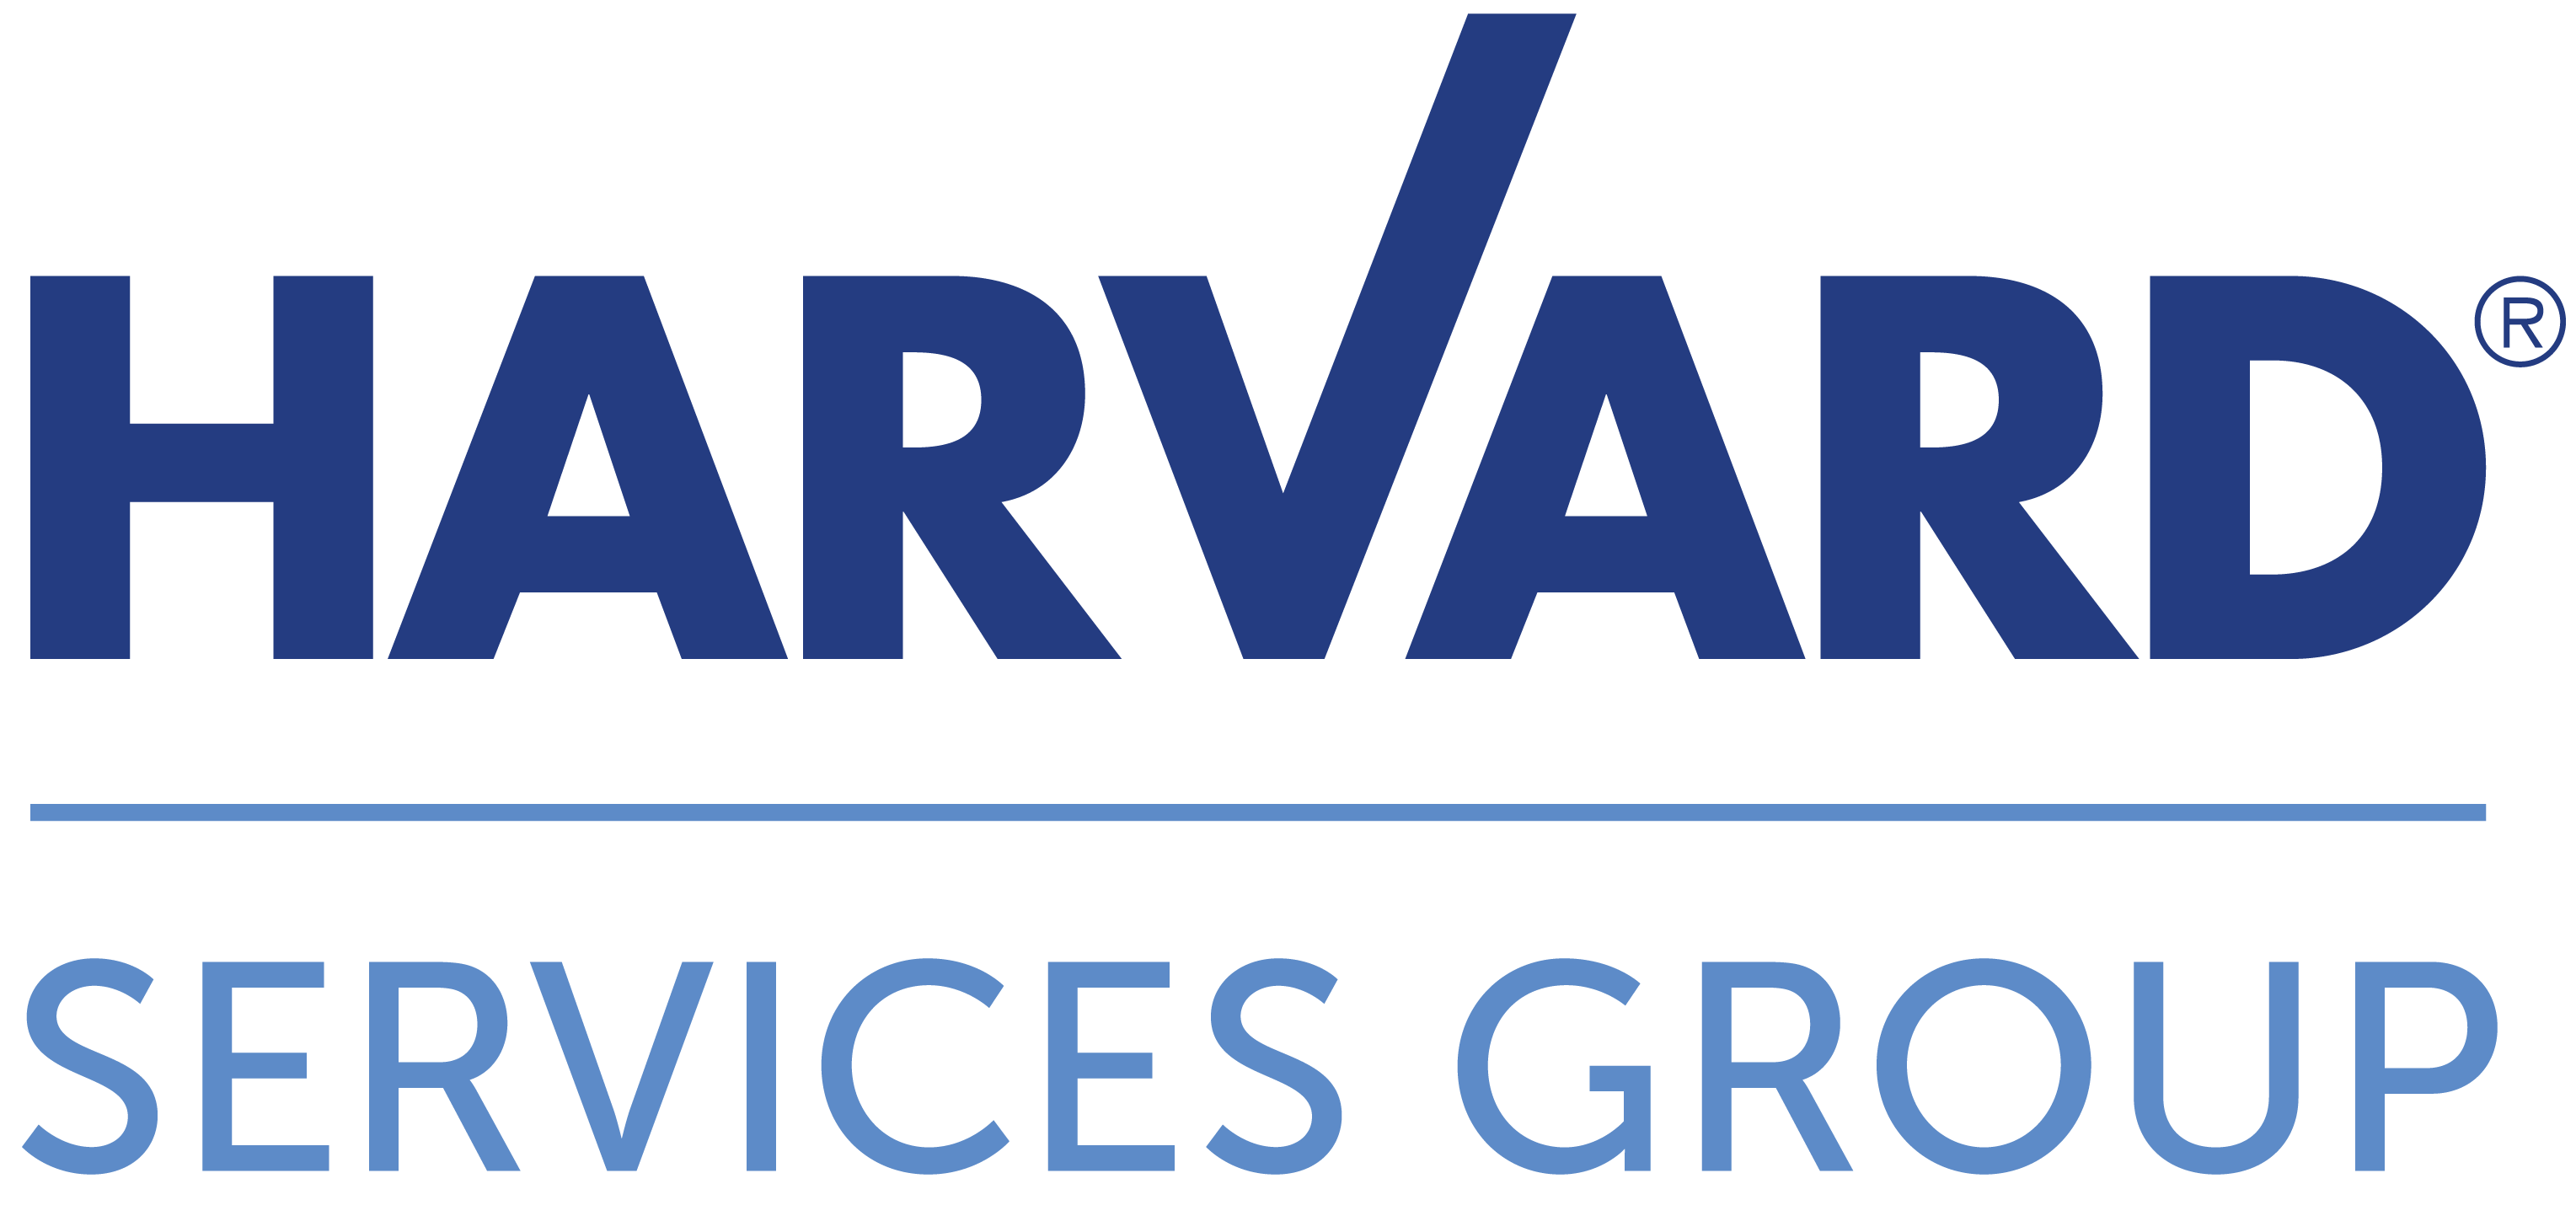 Harvard Services Group Logo